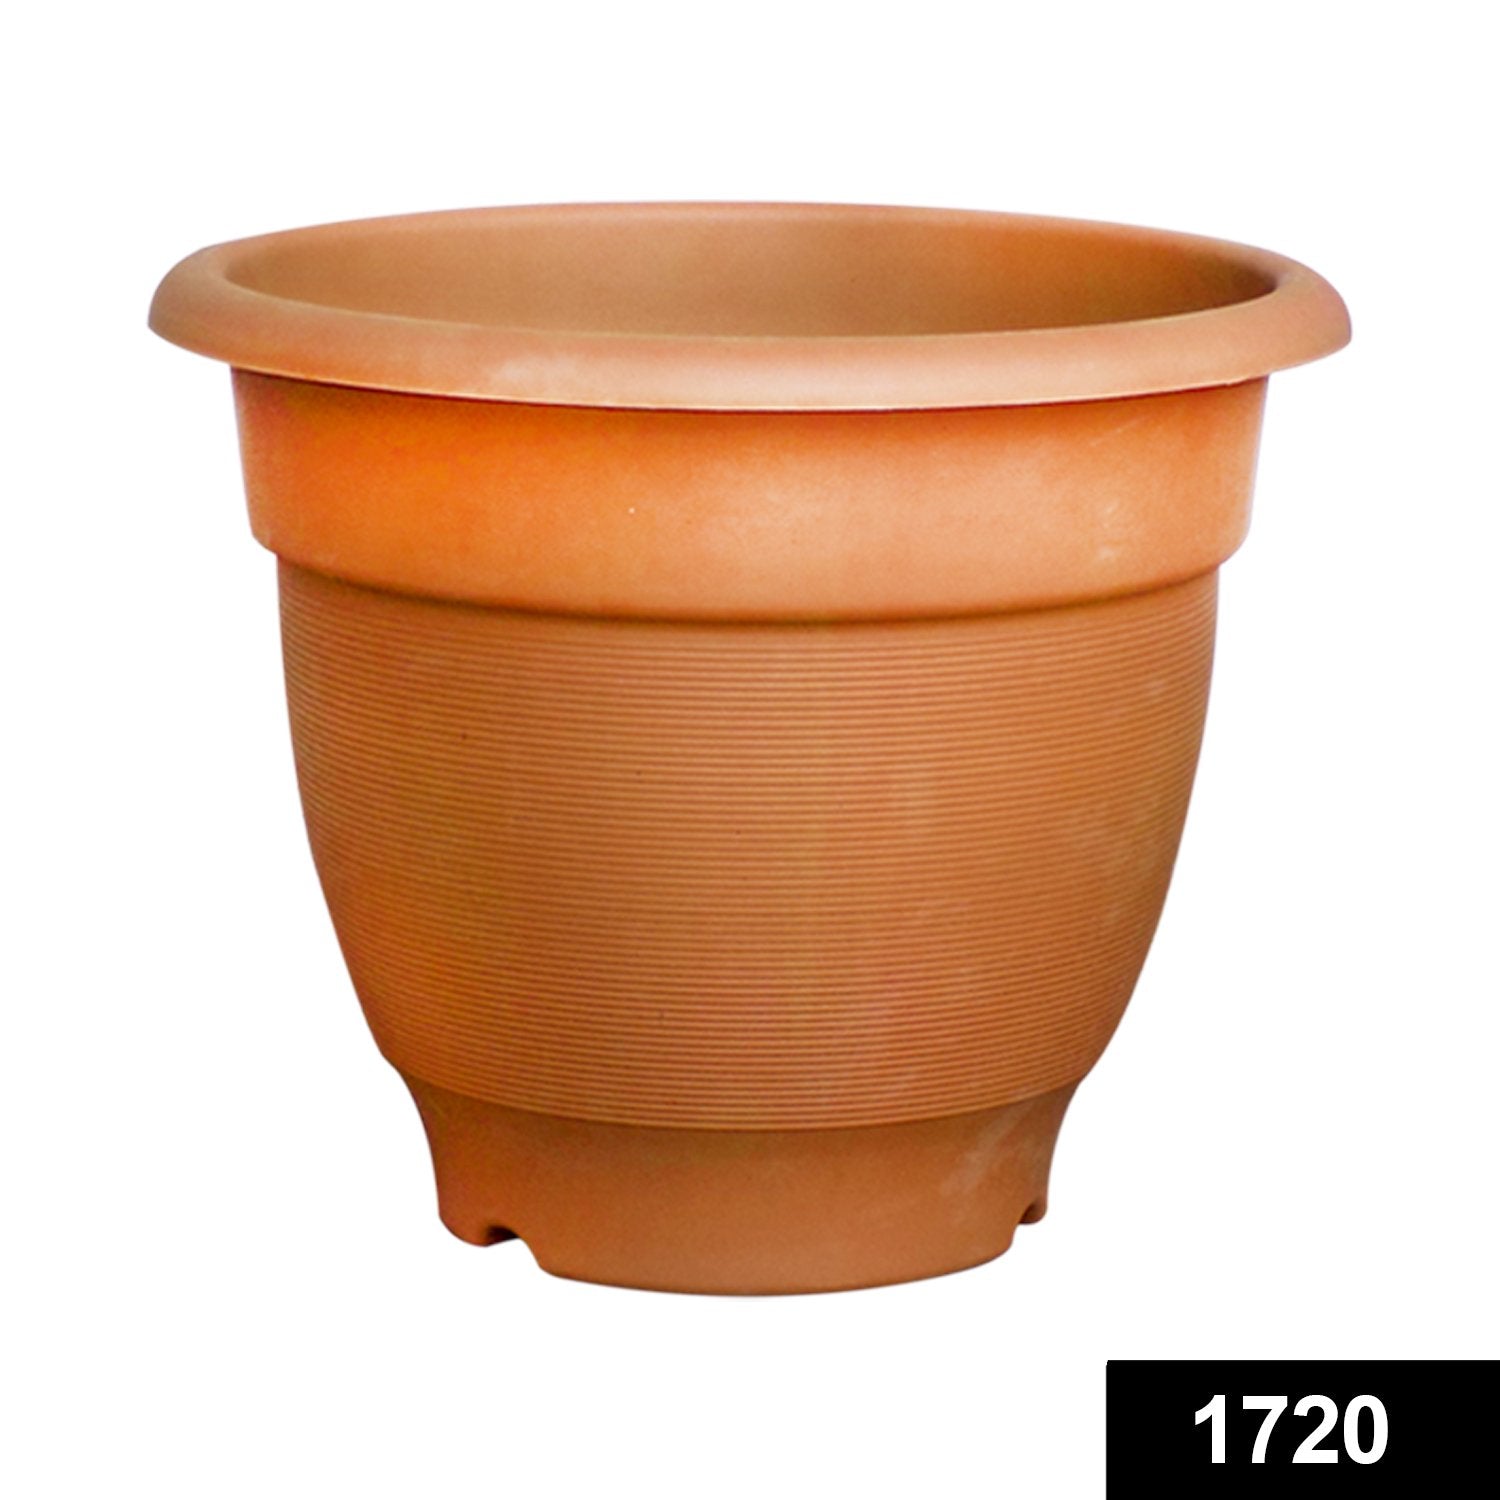 Garden Heavy Plastic Planter Pot Gamla 17x14 inch Color May Vary (1Pc)